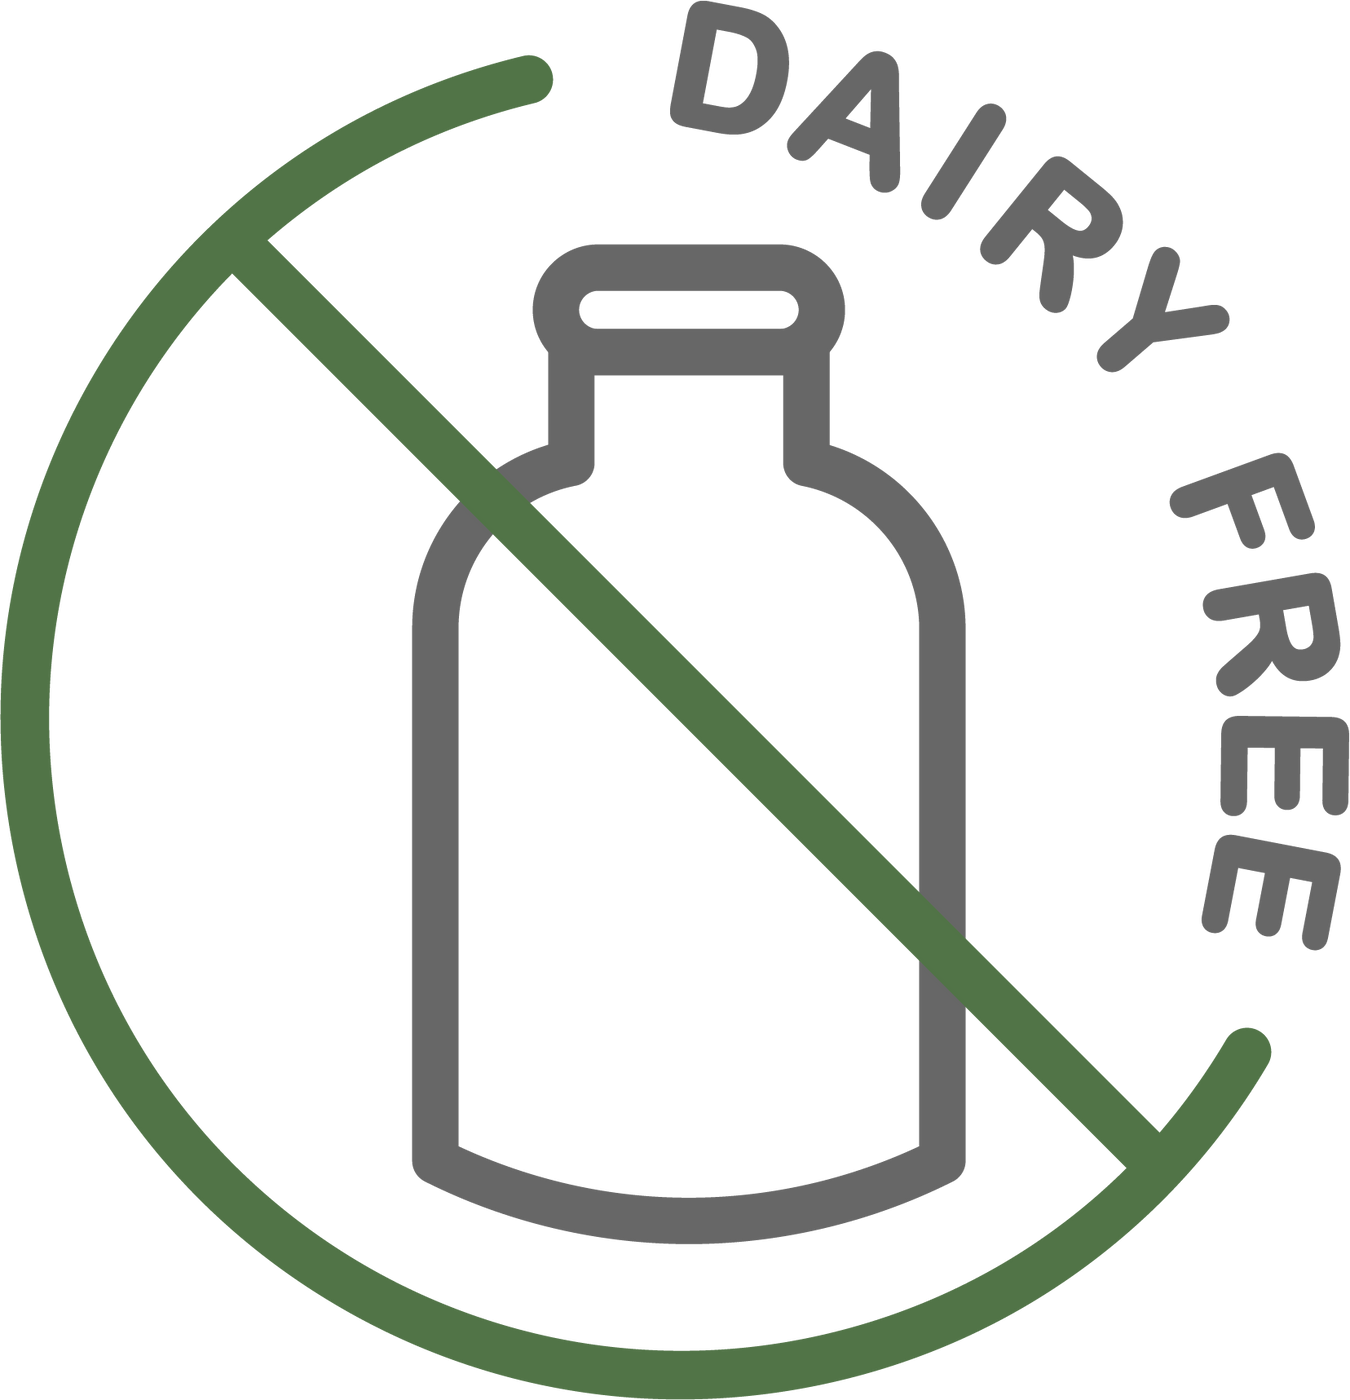 Dairy-Free